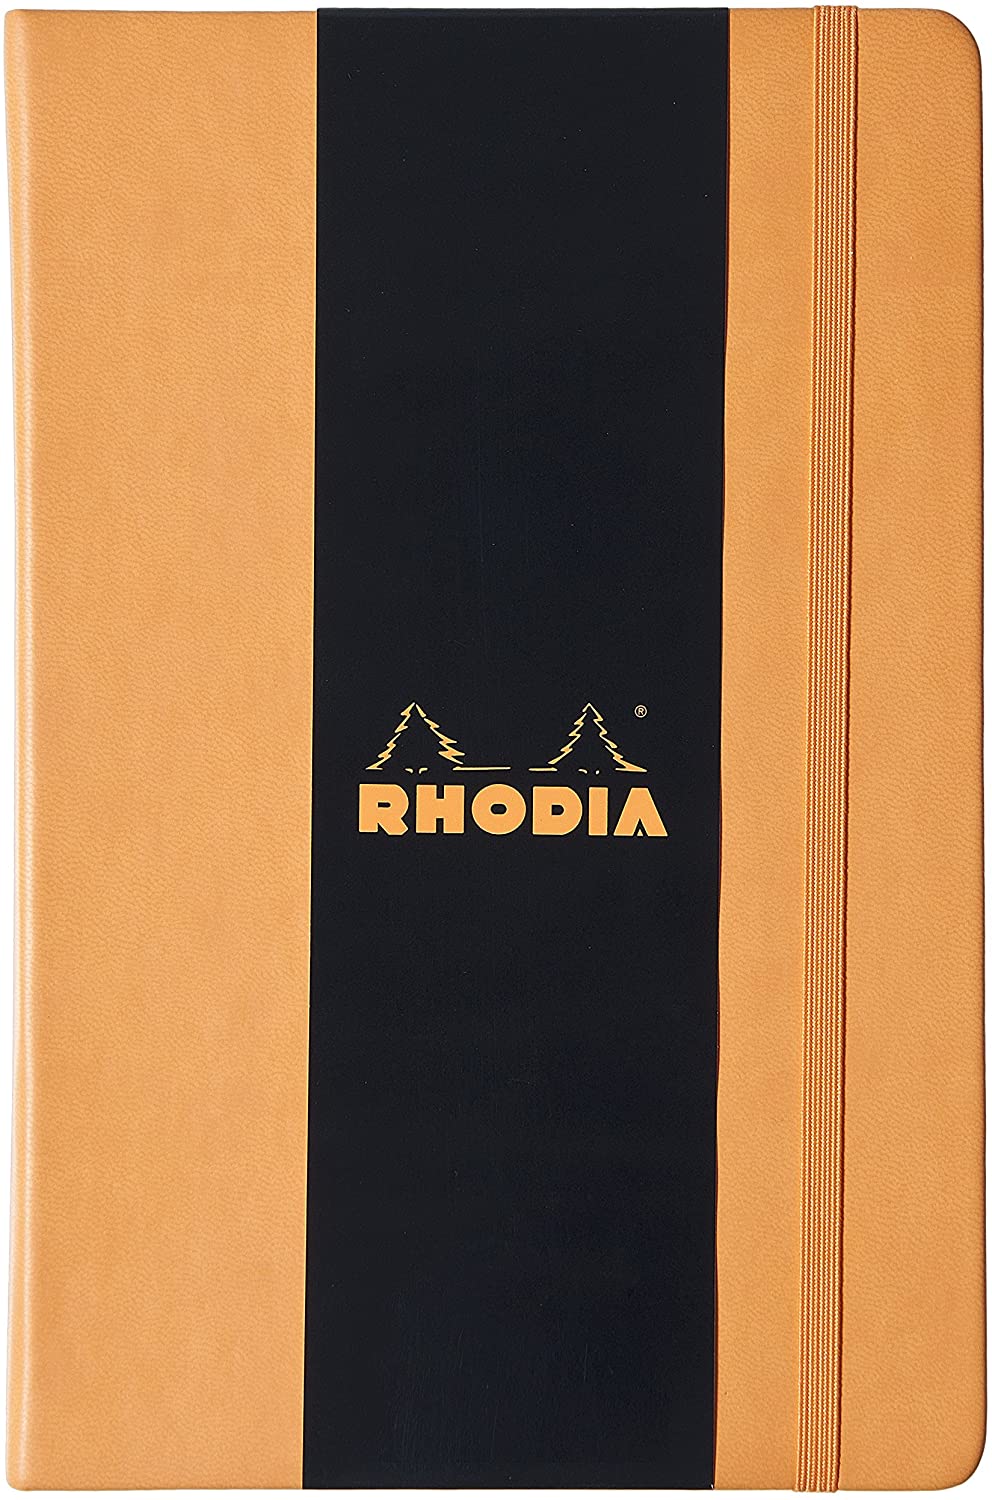 Rhodia Webnotebook Orange 